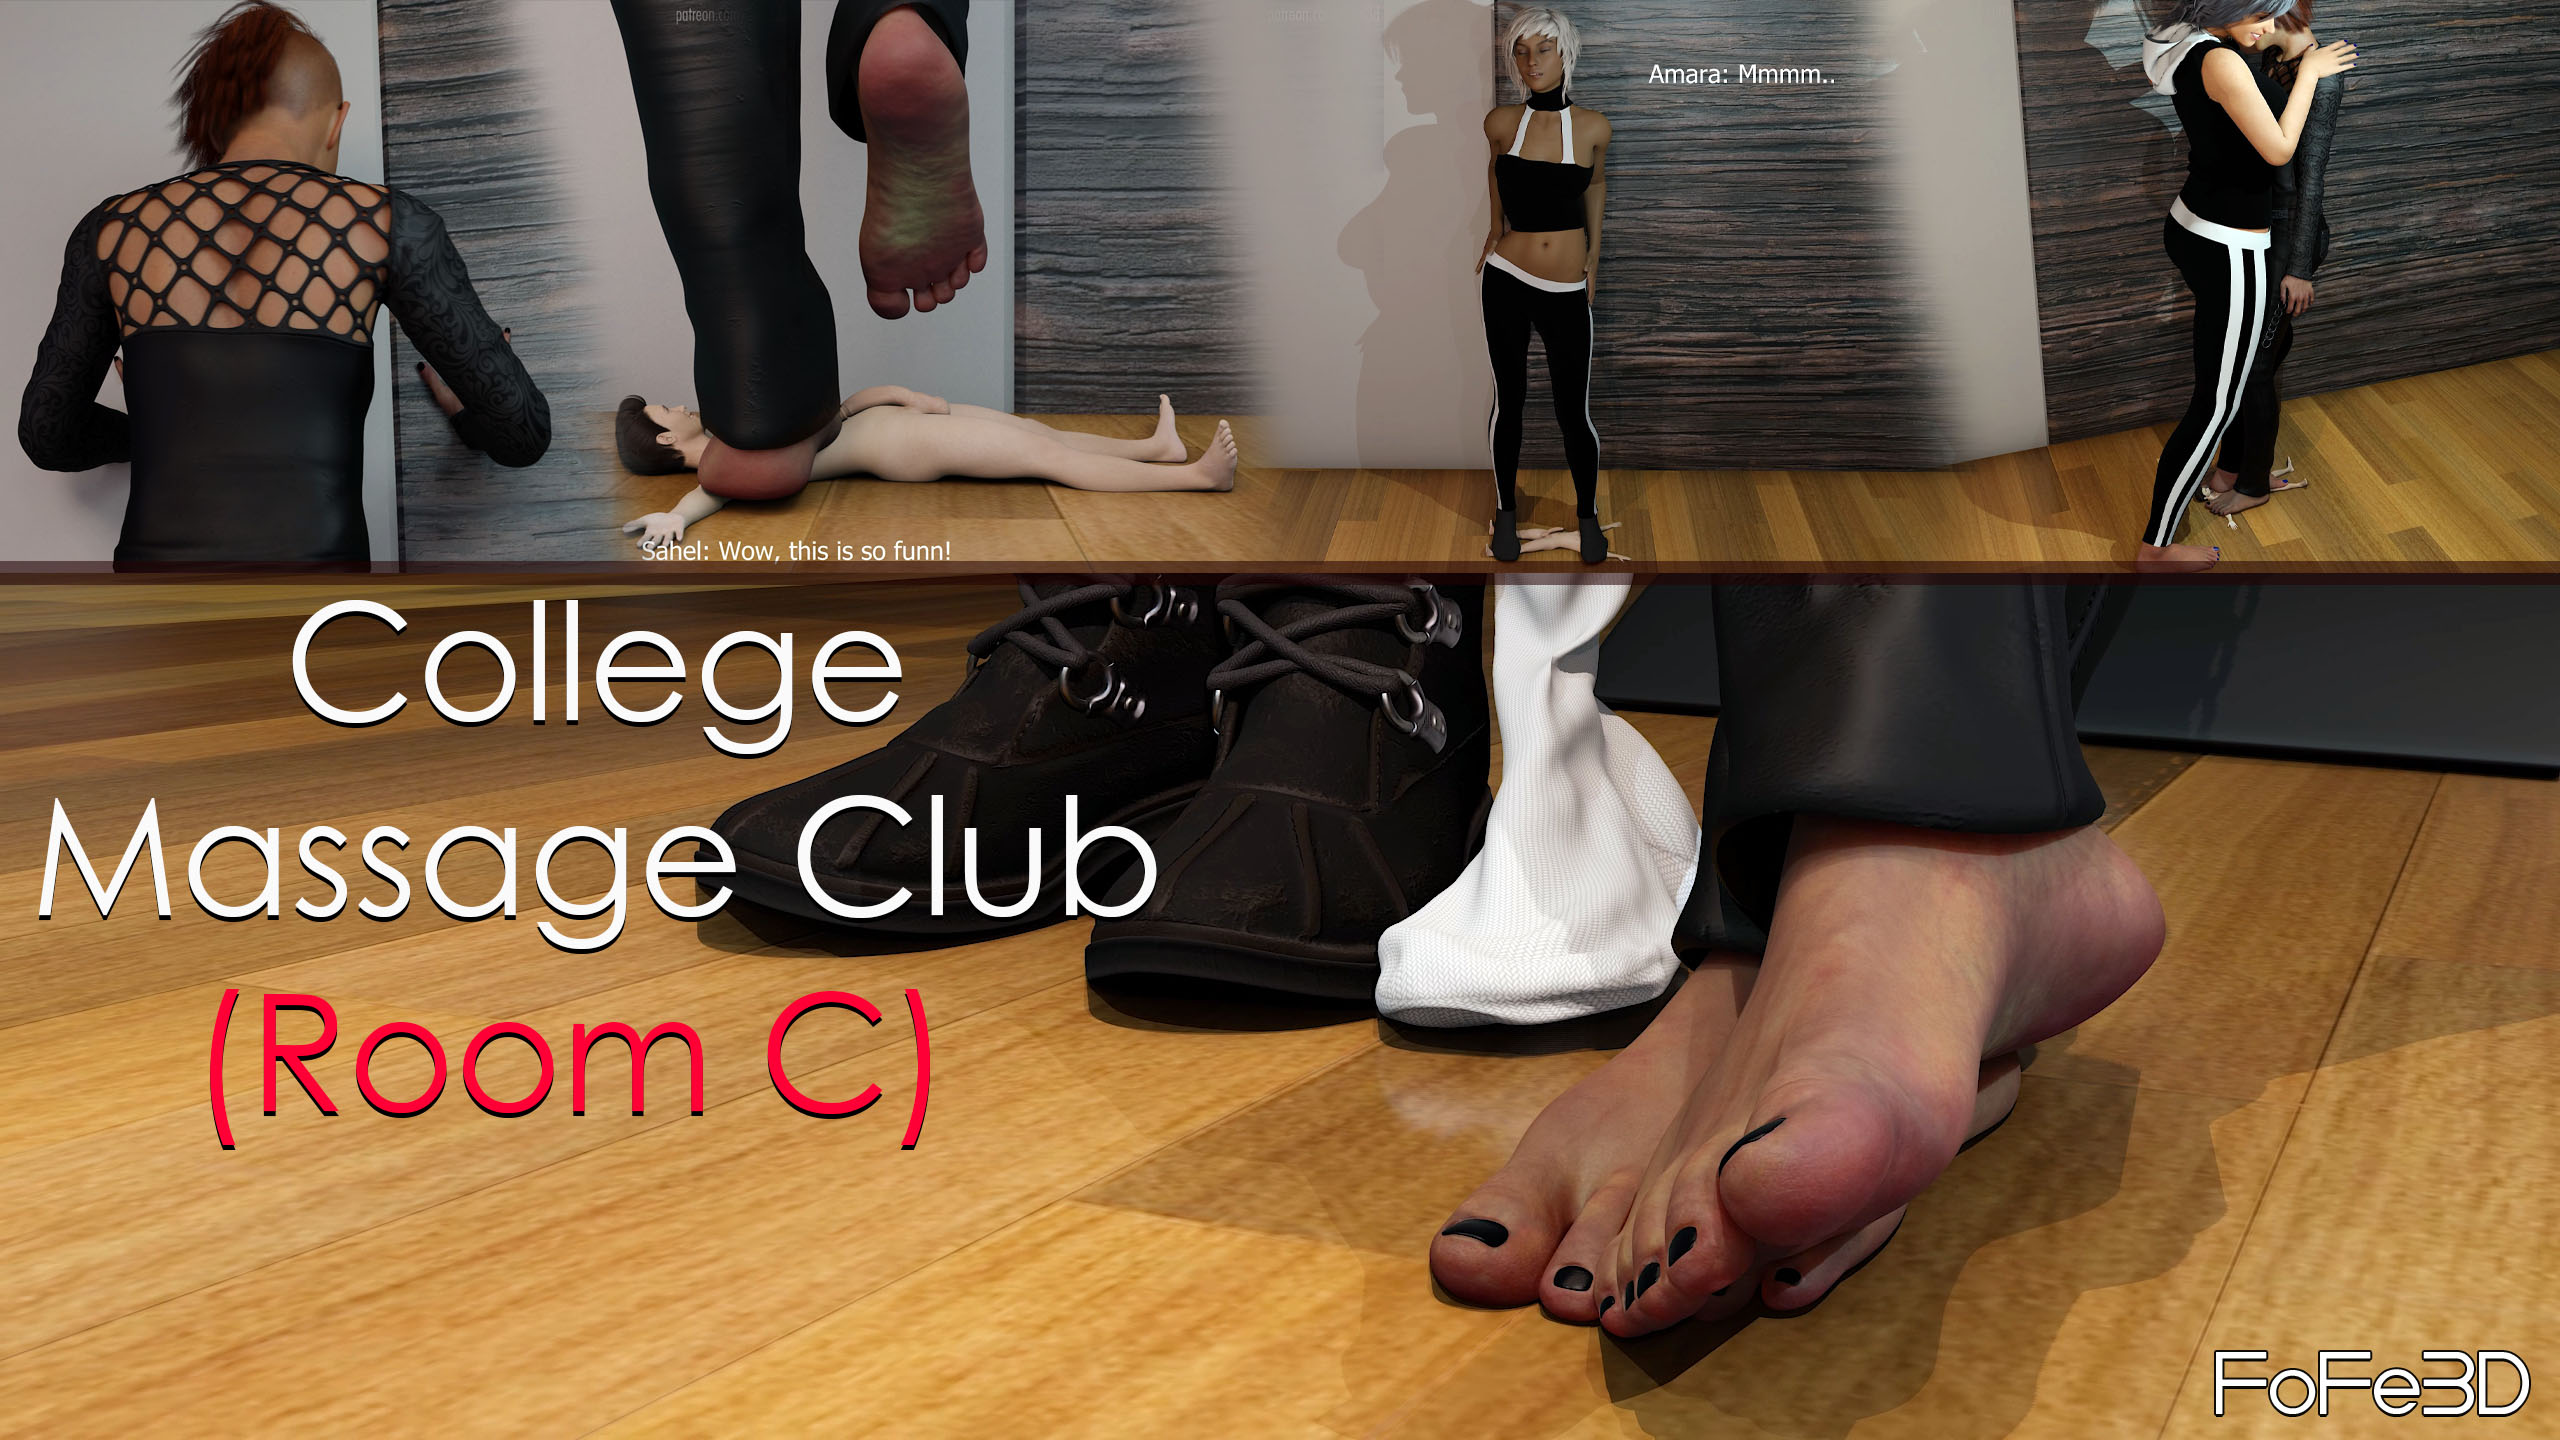 College Massage Club - Room C [Animation]